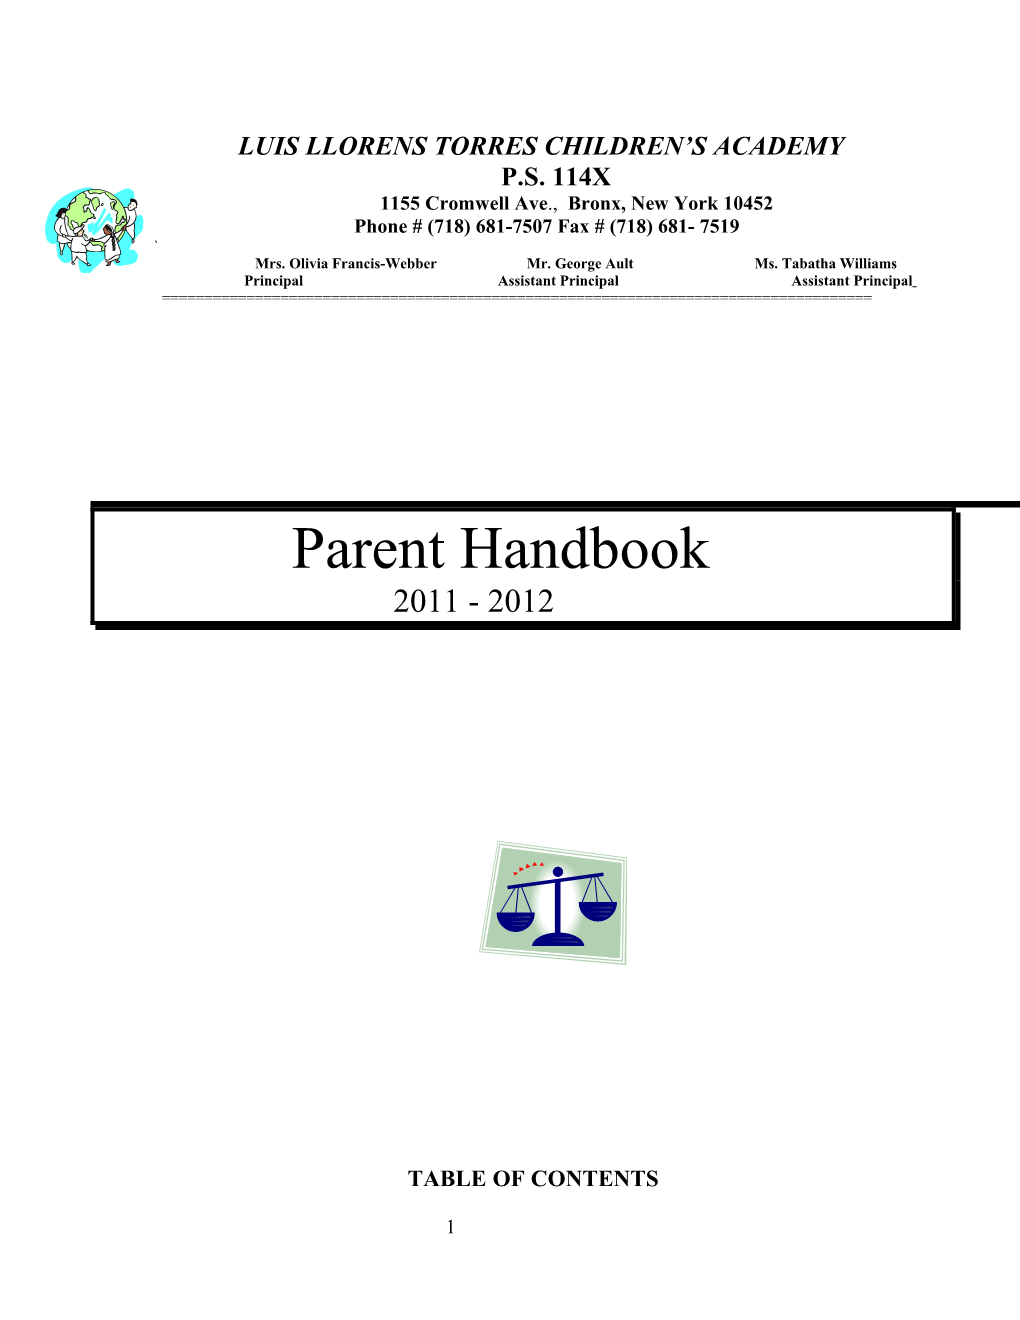 Parent/Child Contract